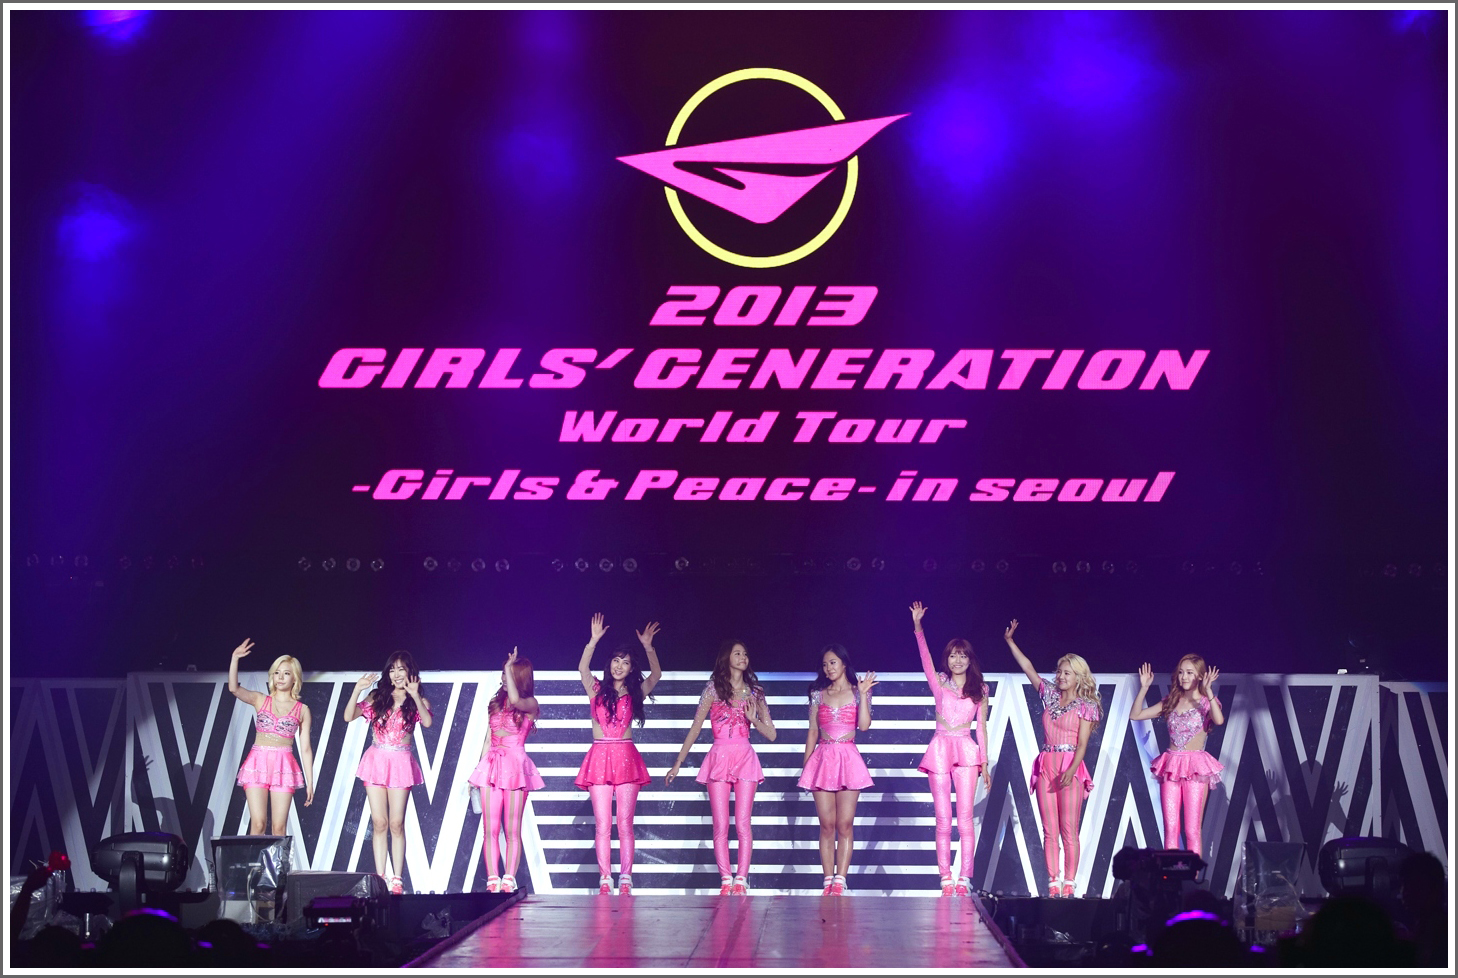 [photo taken by me] 2013 Girls Generation World Tour In Seoul